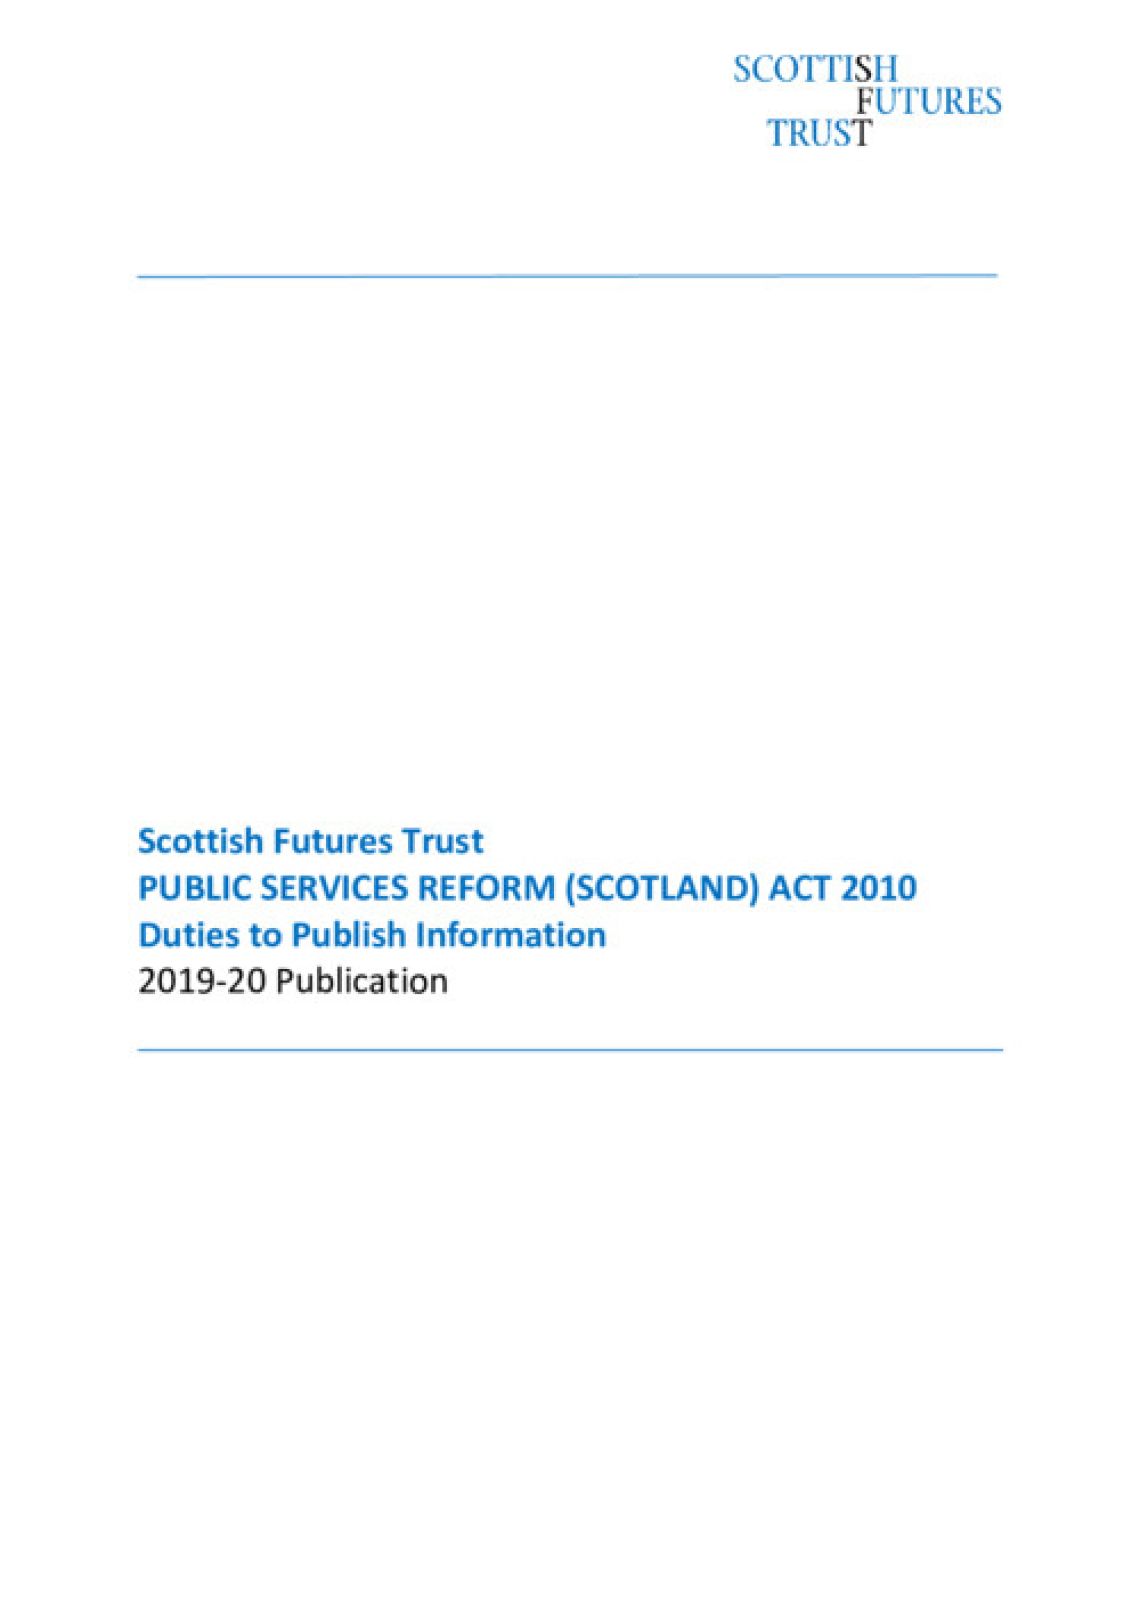 SFT PSRA Publication 2019 - 2020 cover